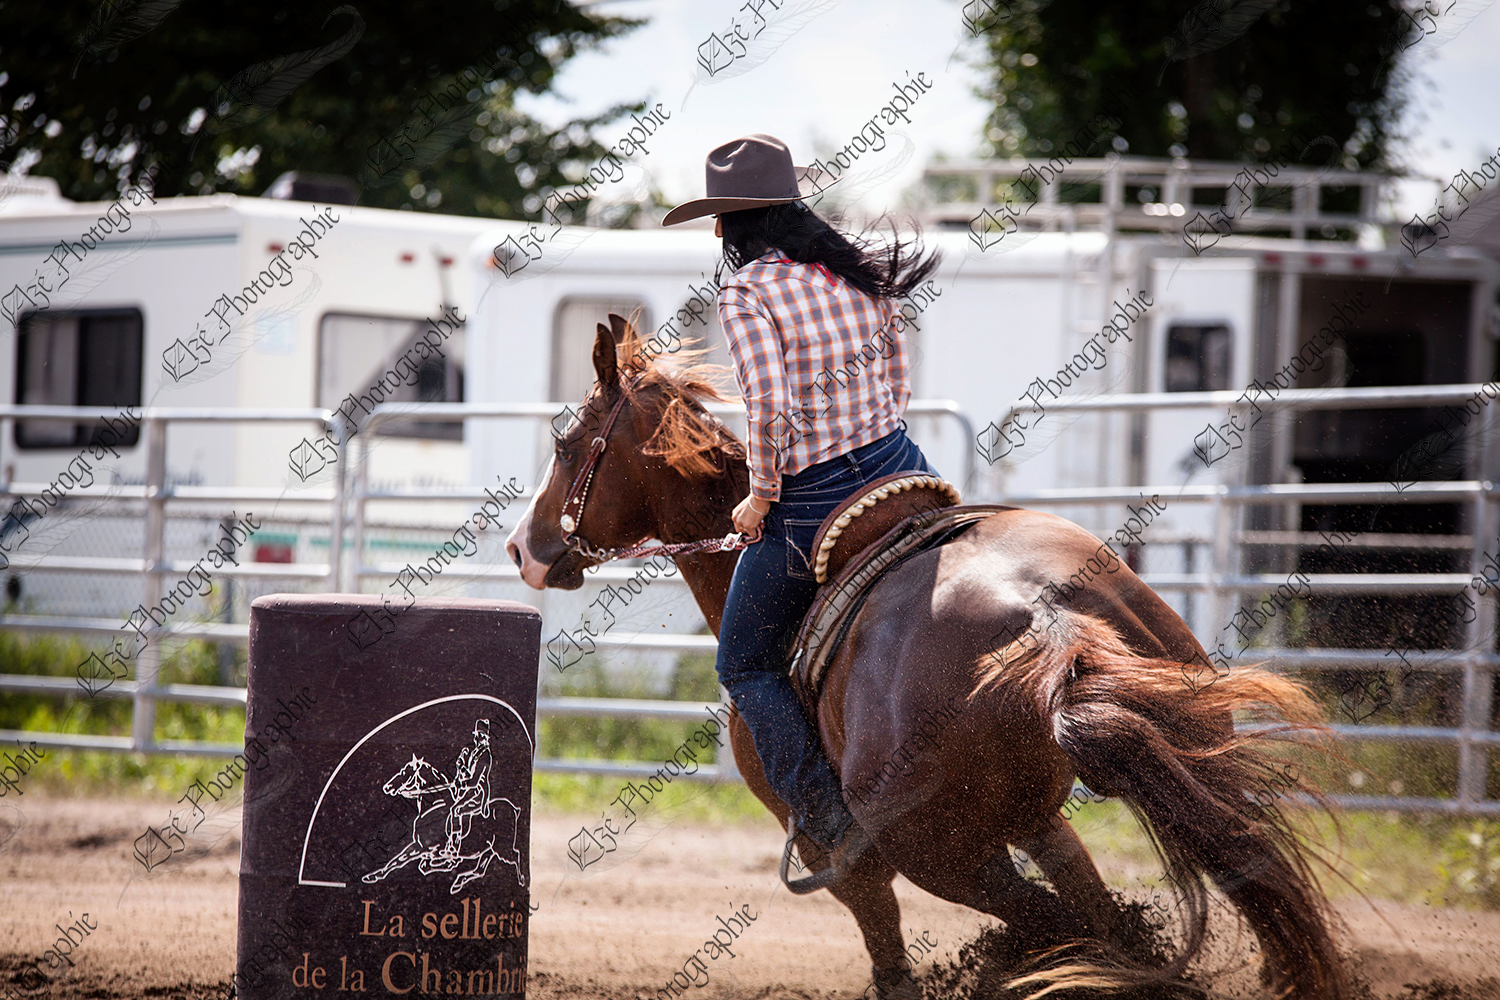 elze_photo_7653_vitesse_cheval_competition_barrel_racing